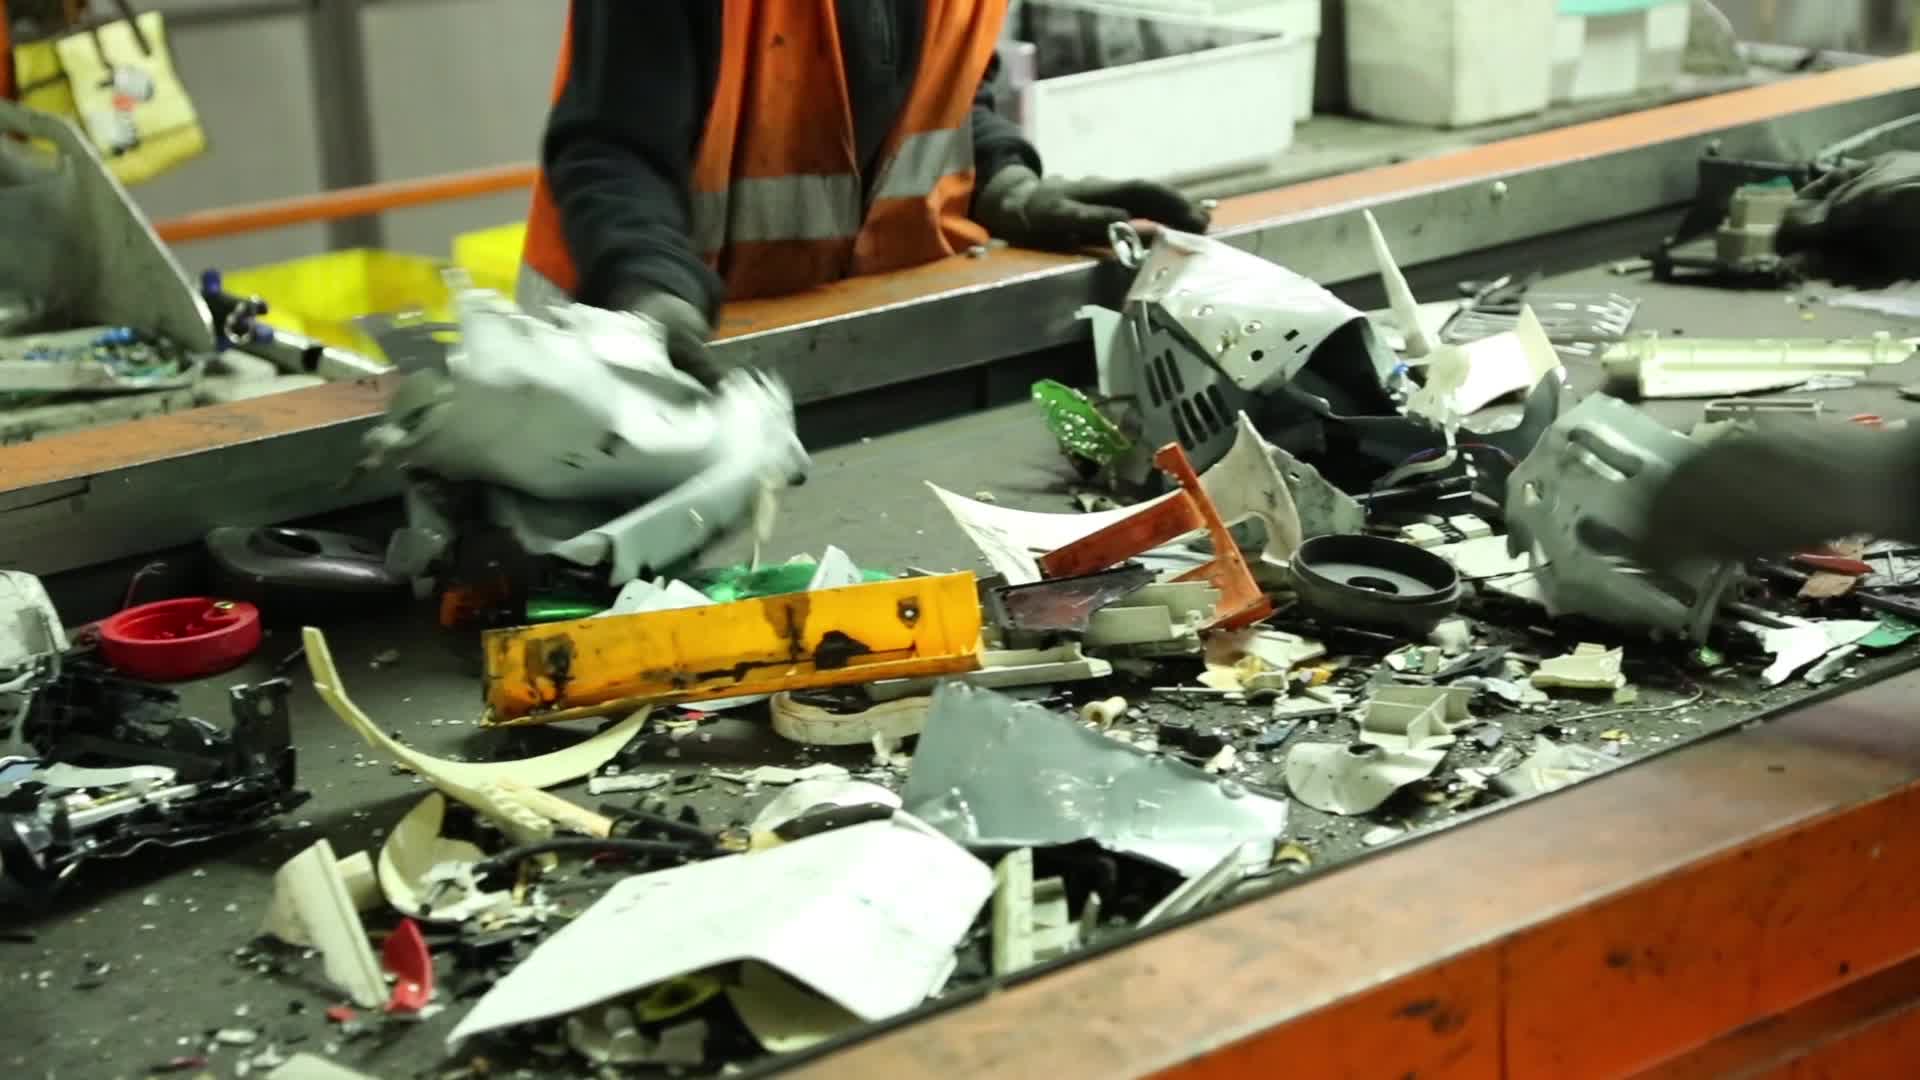 Electronic Waste on Conveyor Belt - Tech - 4fun.com